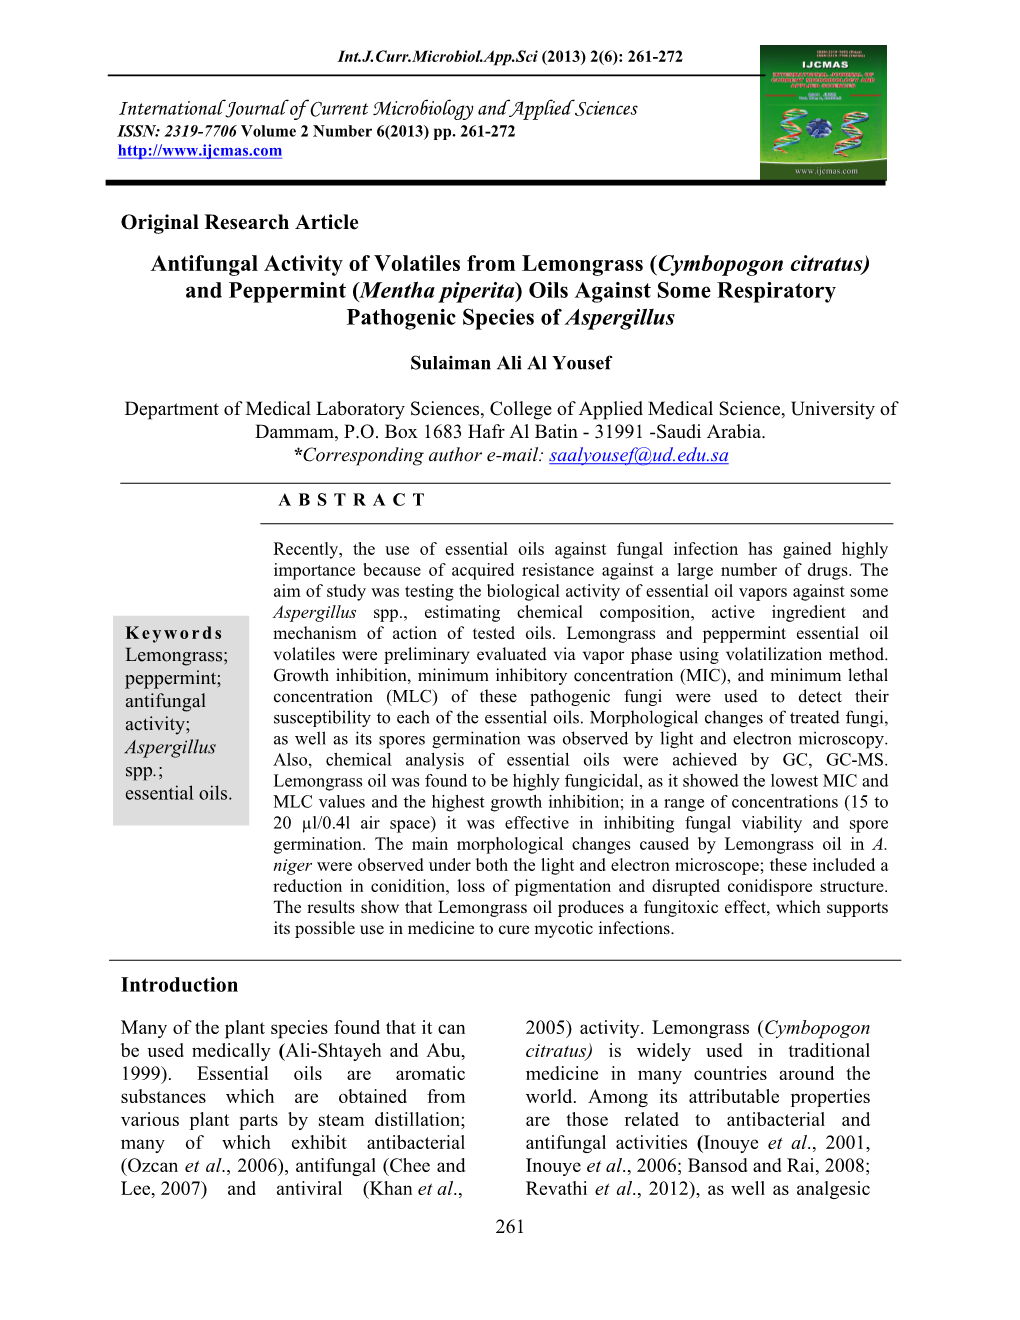 Antifungal Activity of Volatiles from Lemongrass (Cymbopogon Citratus)